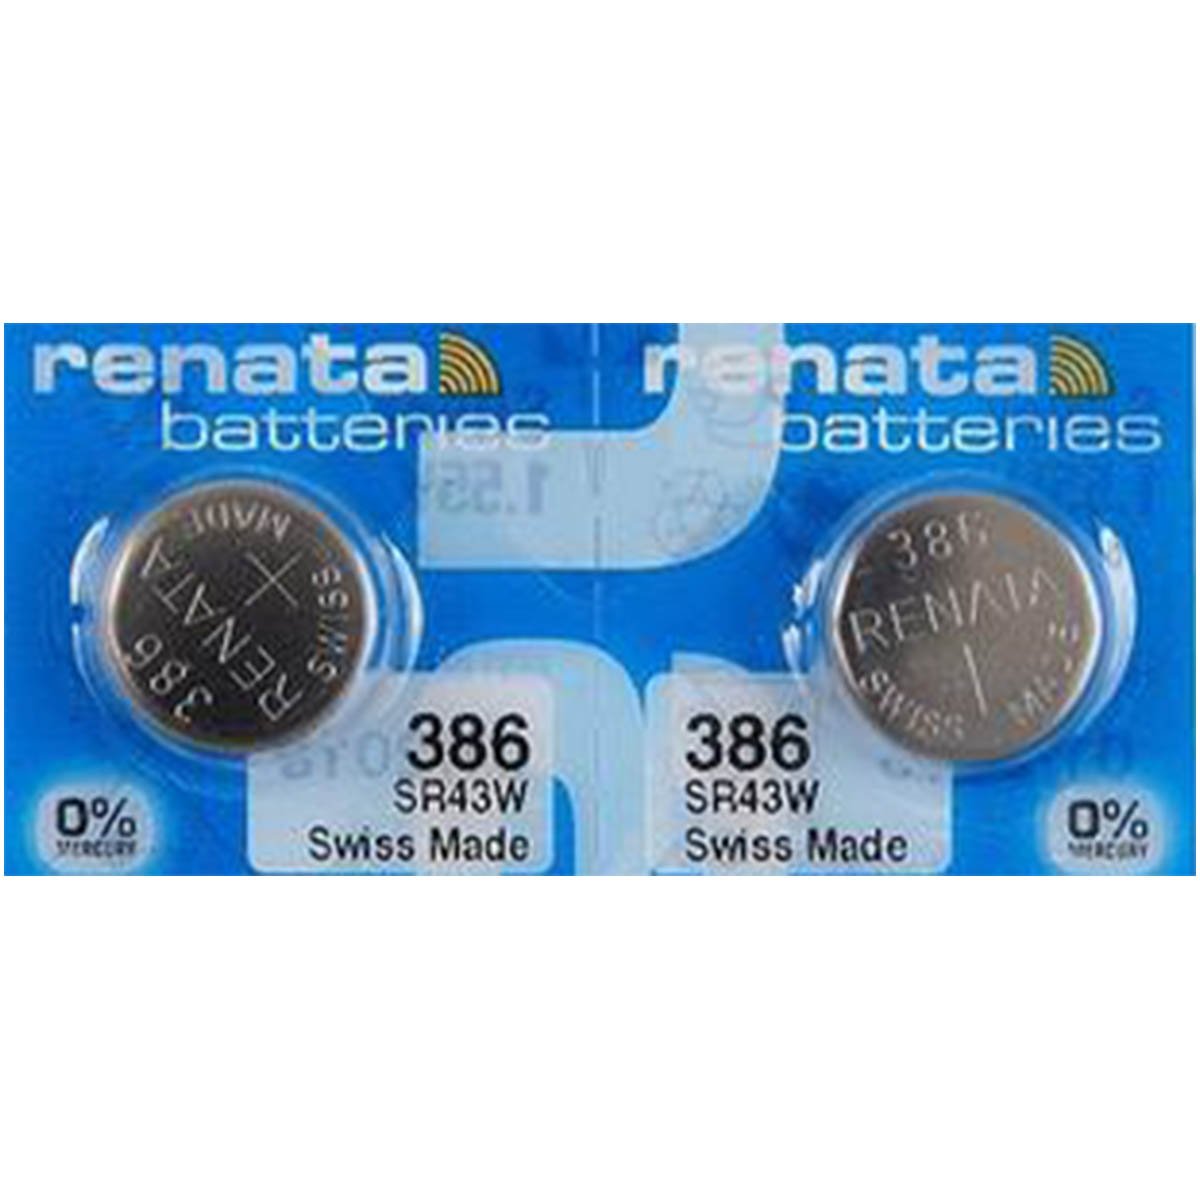 Renata 389 Battery (SR1130W) Silver Oxide  (1PC)